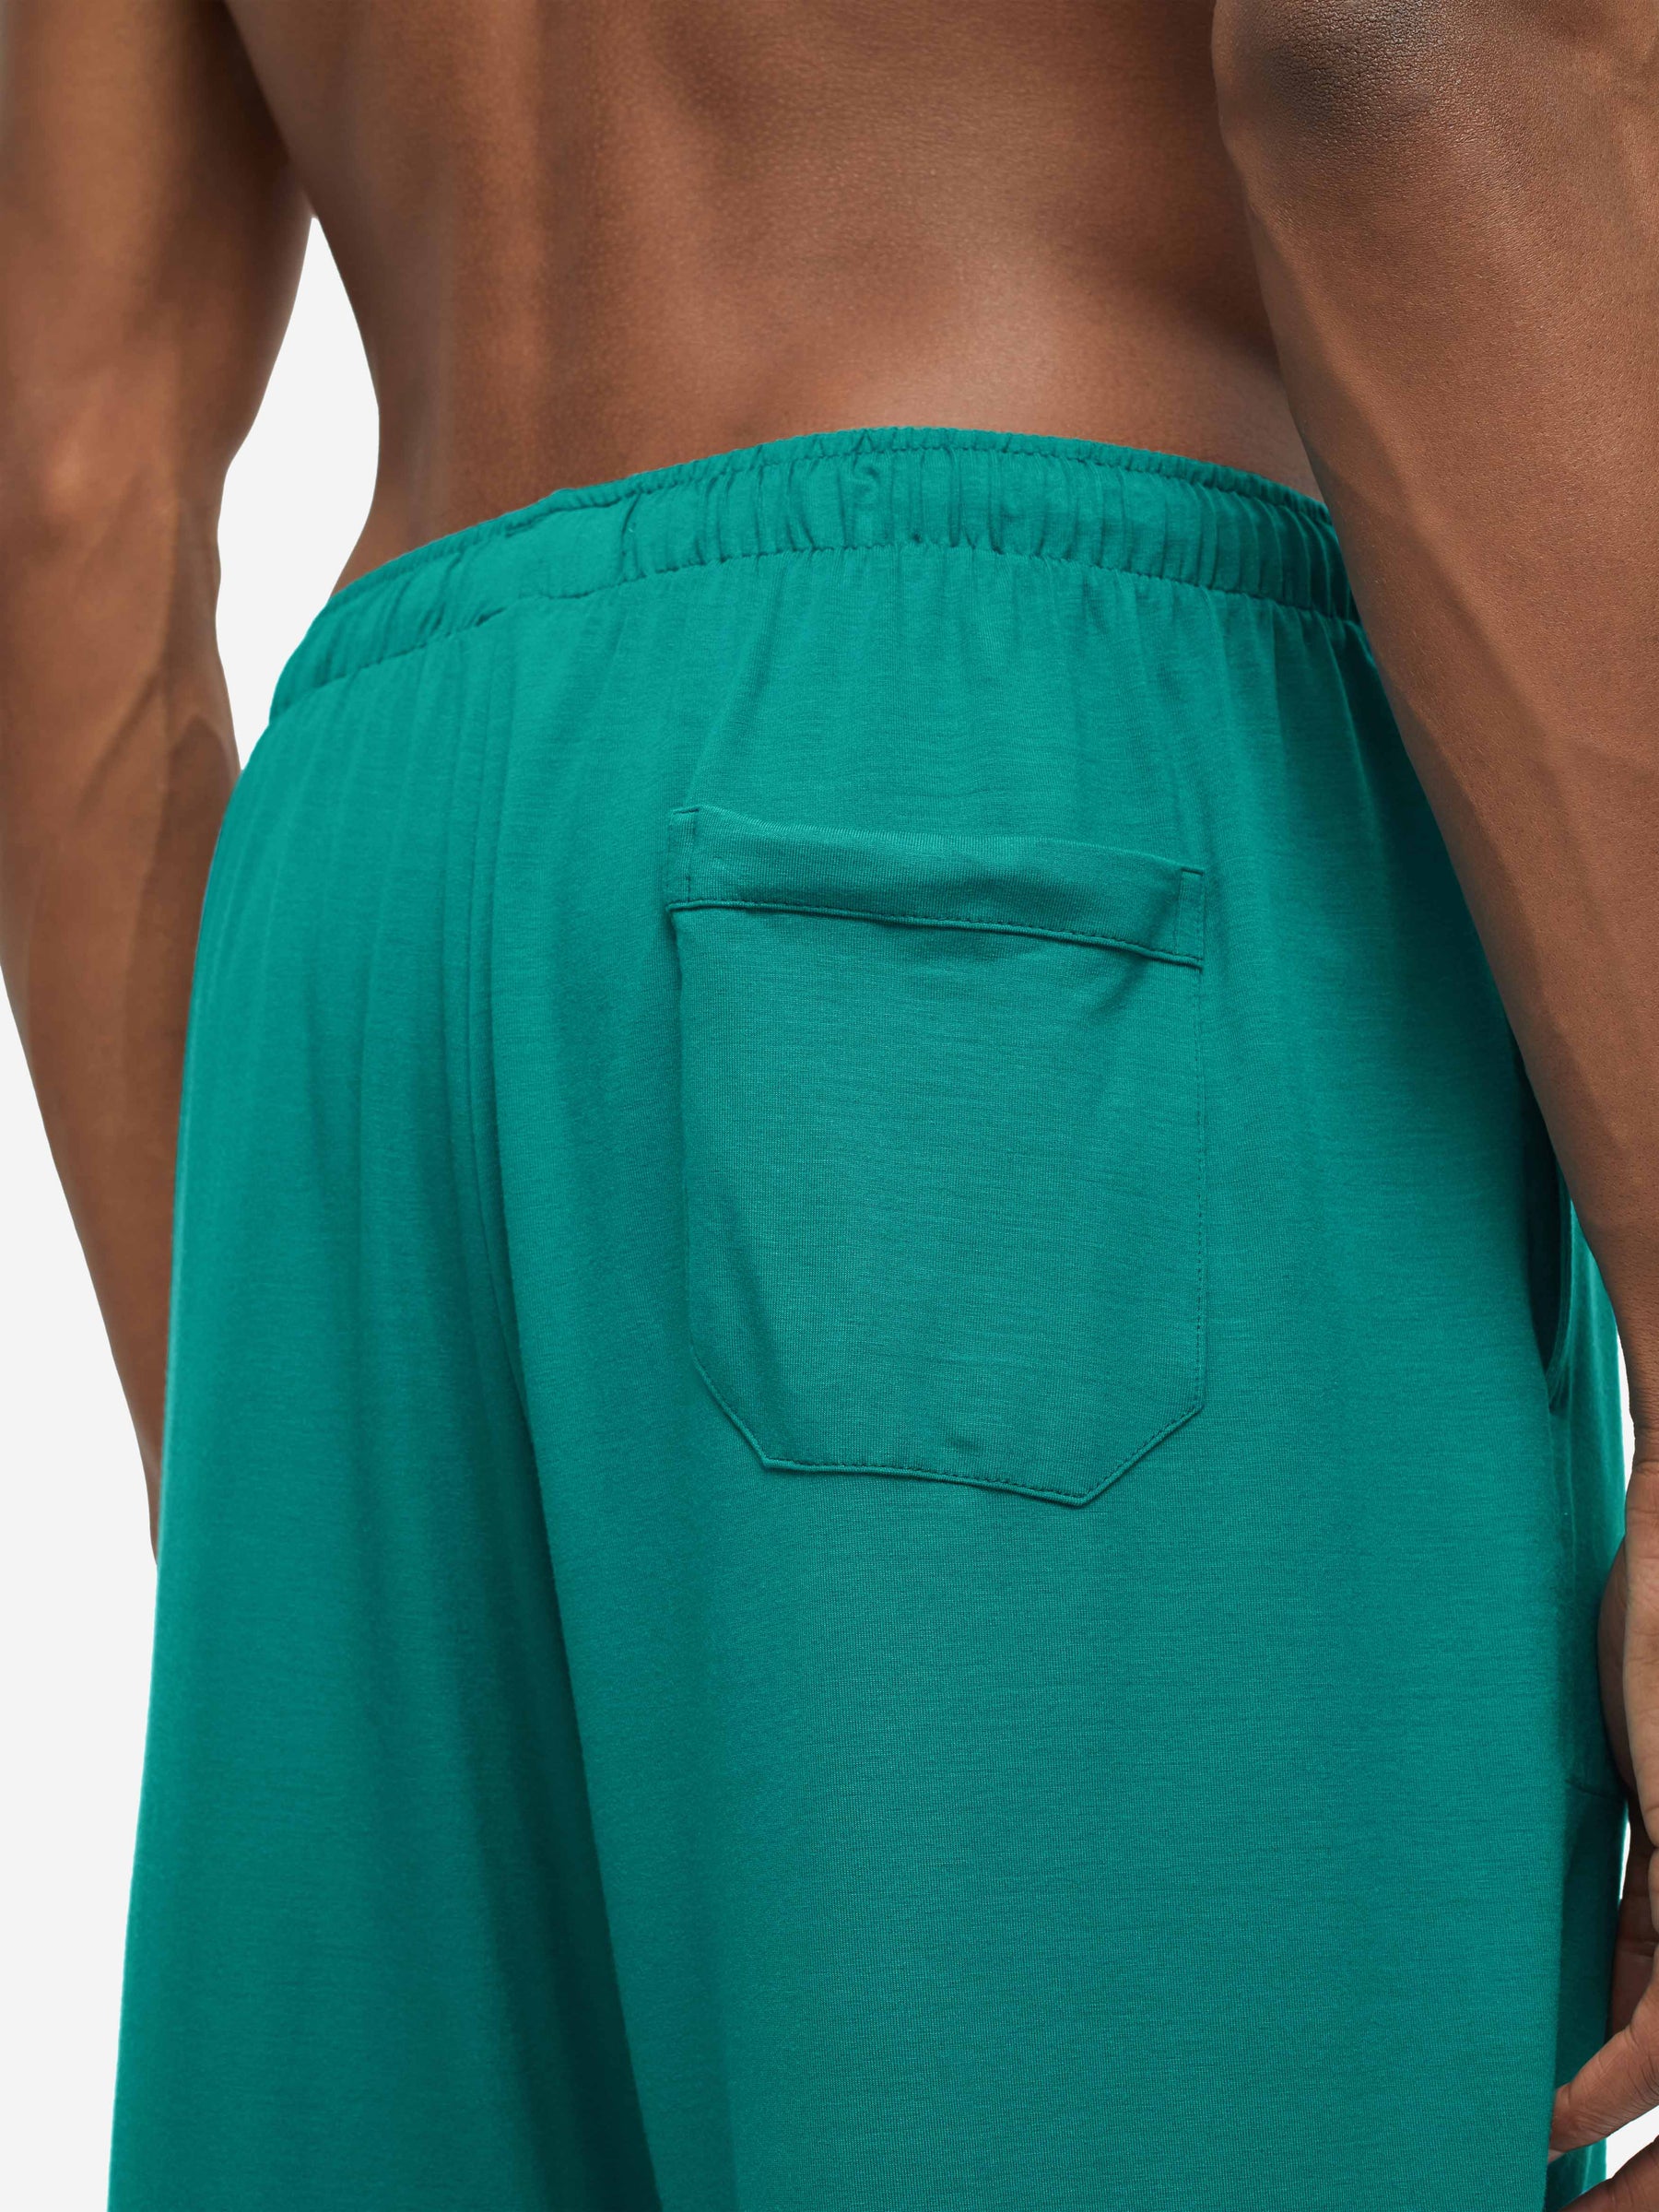 Men's Lounge Shorts Basel Micro Modal Stretch Jungle Green